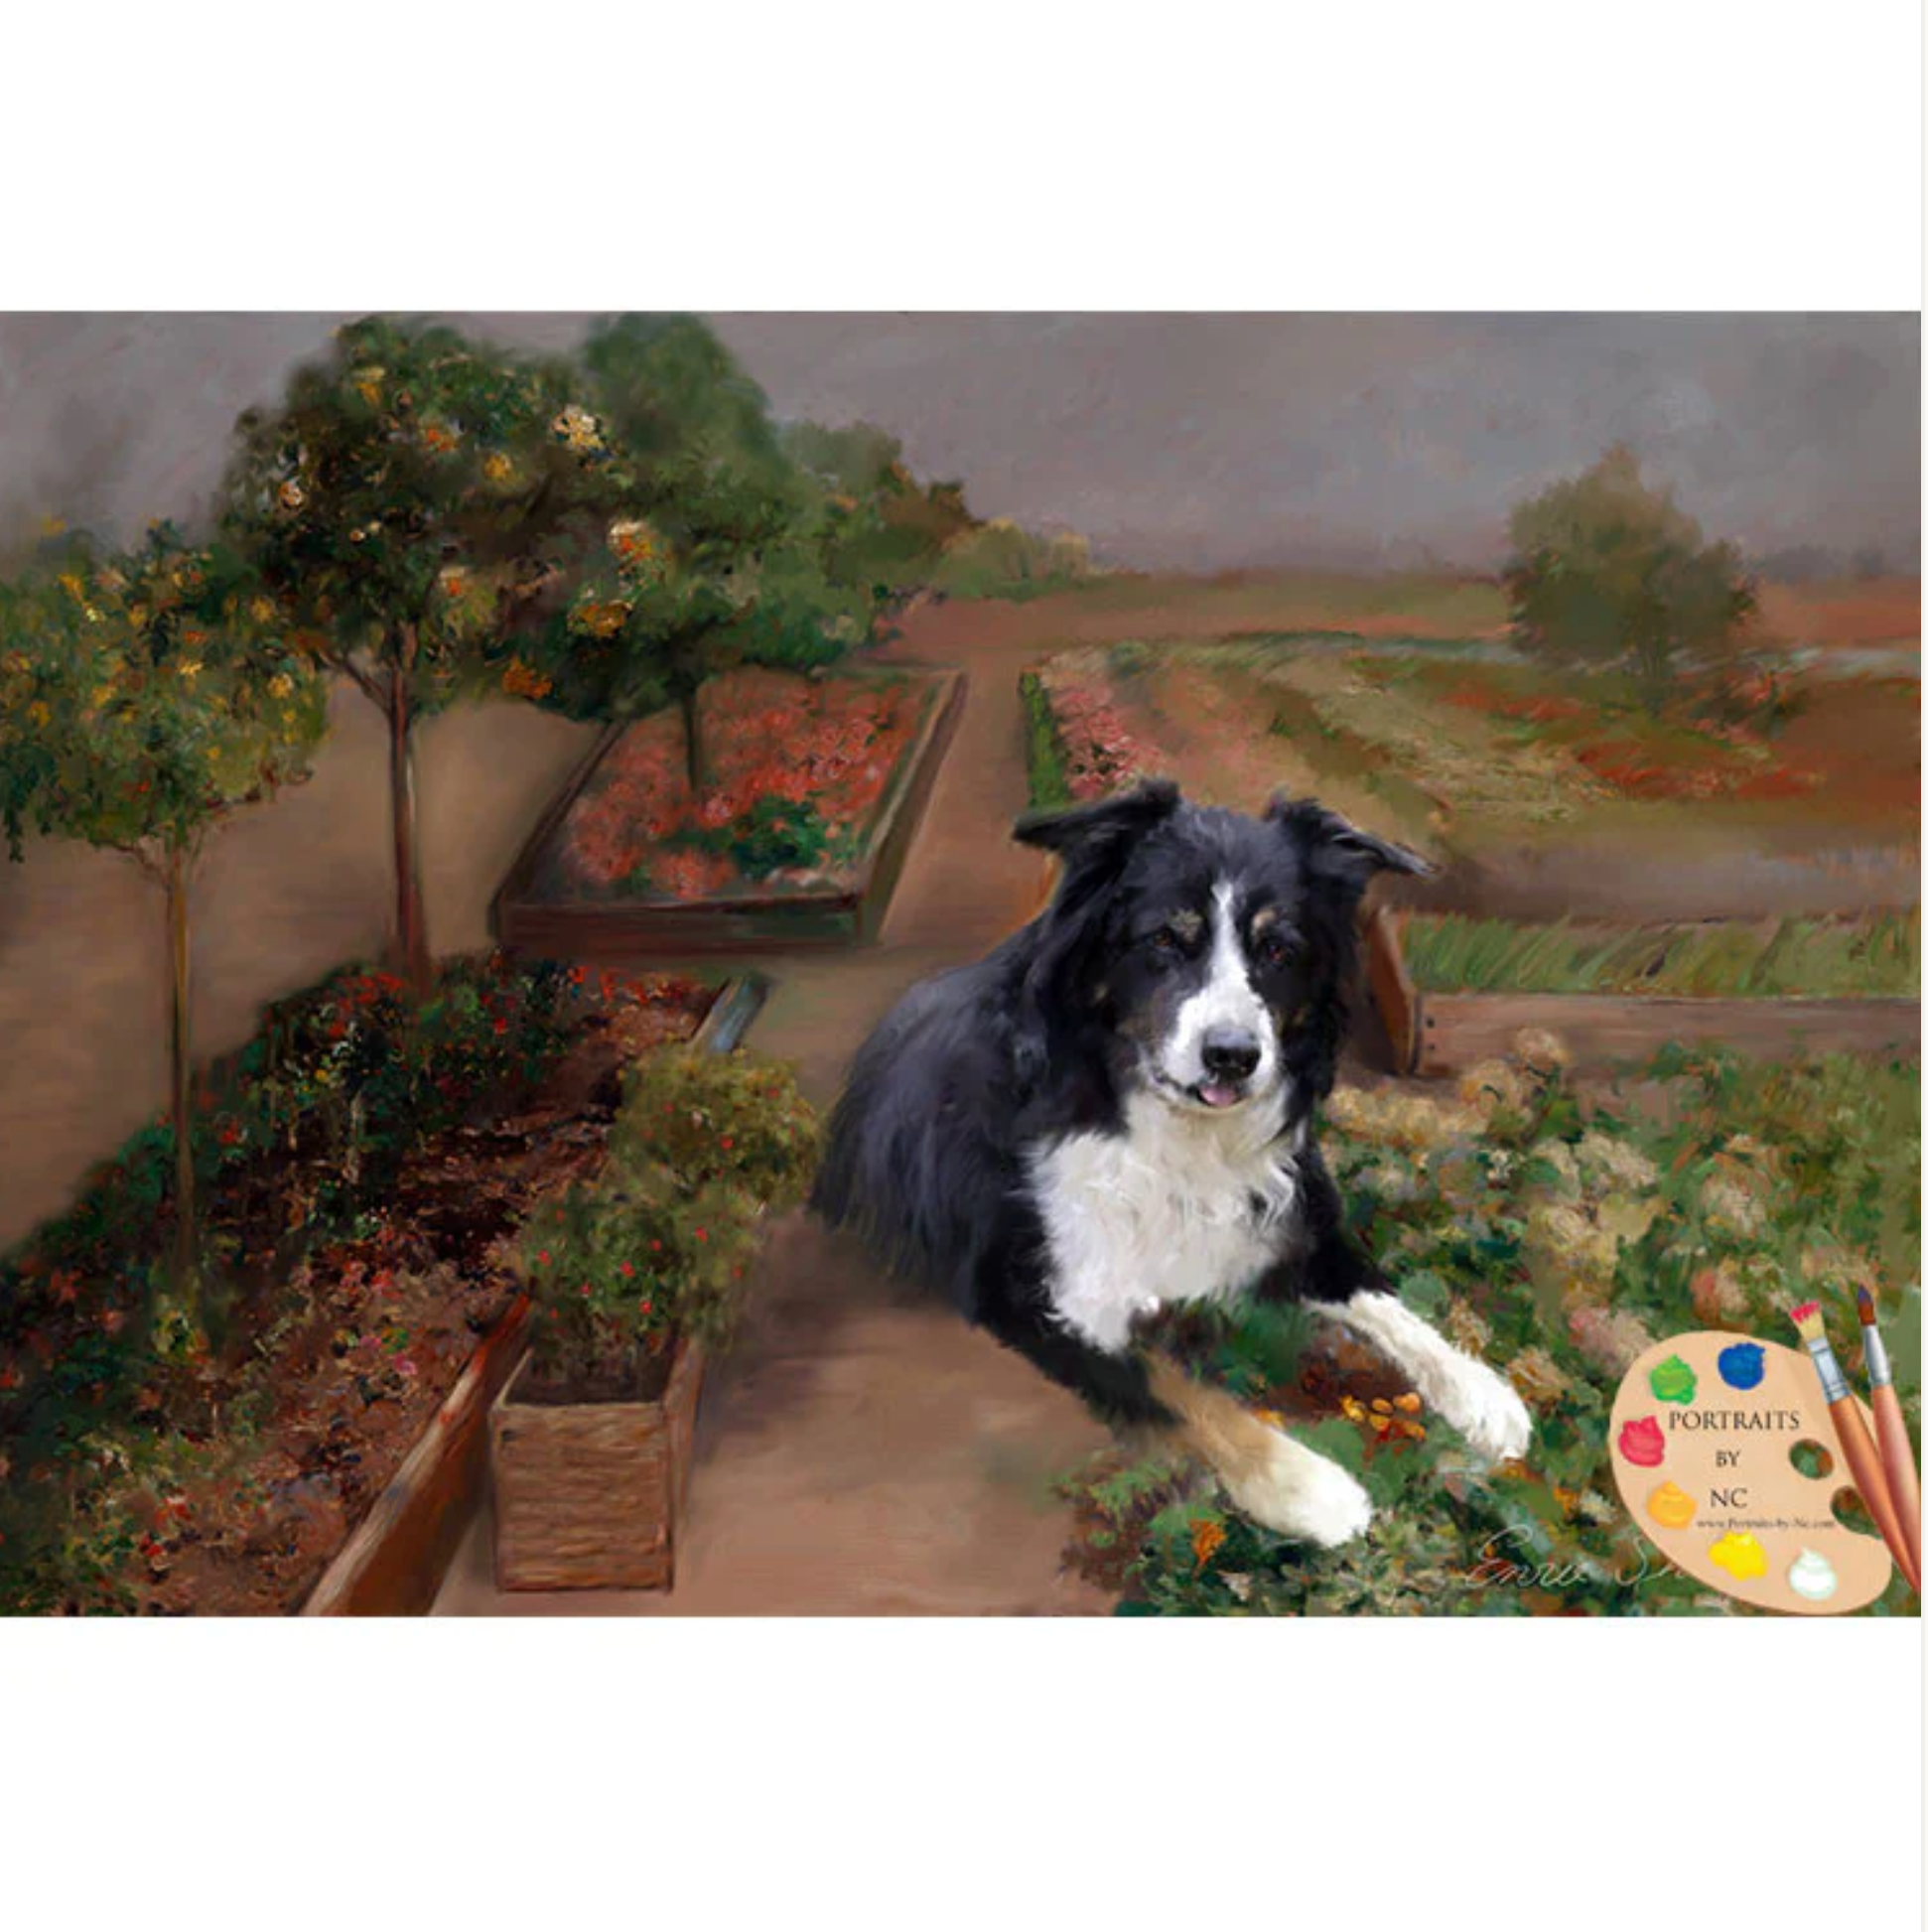 Border Collie Dog Digital Pet Portrait Painting full size